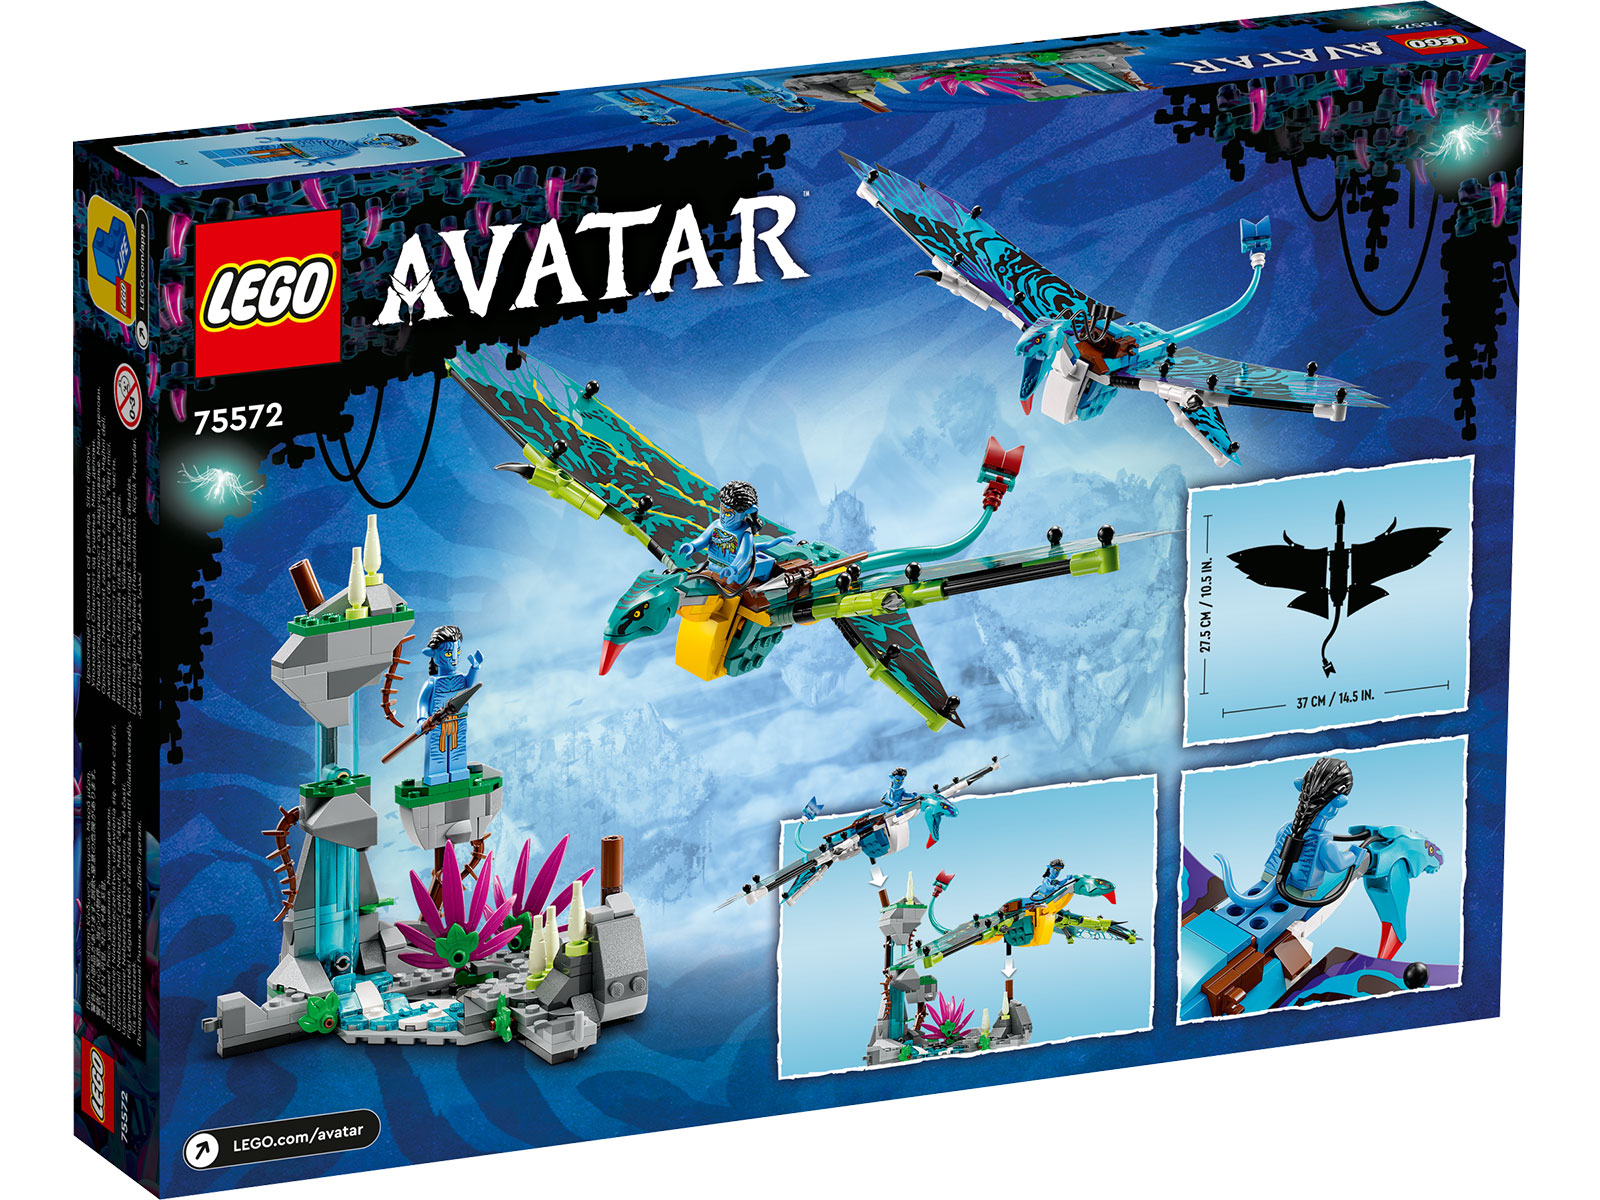 LEGO® Avatar 75572 - Jakes und Neytiris erster Flug auf einem Banshee - Box Back